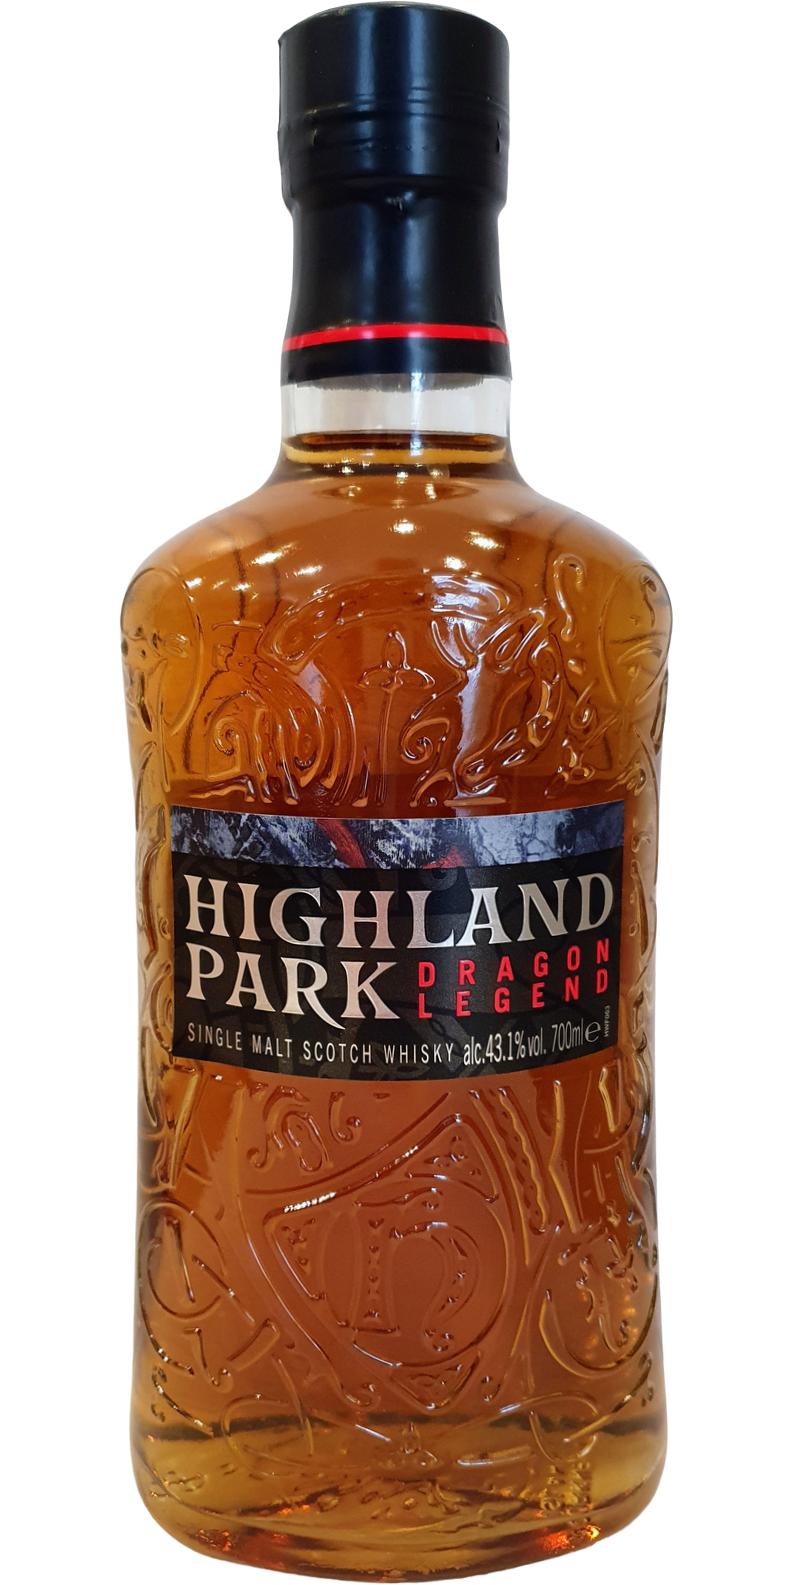 Highland Park Dragon Legend Sherry seasoned Oak Casks 43.1% 700ml